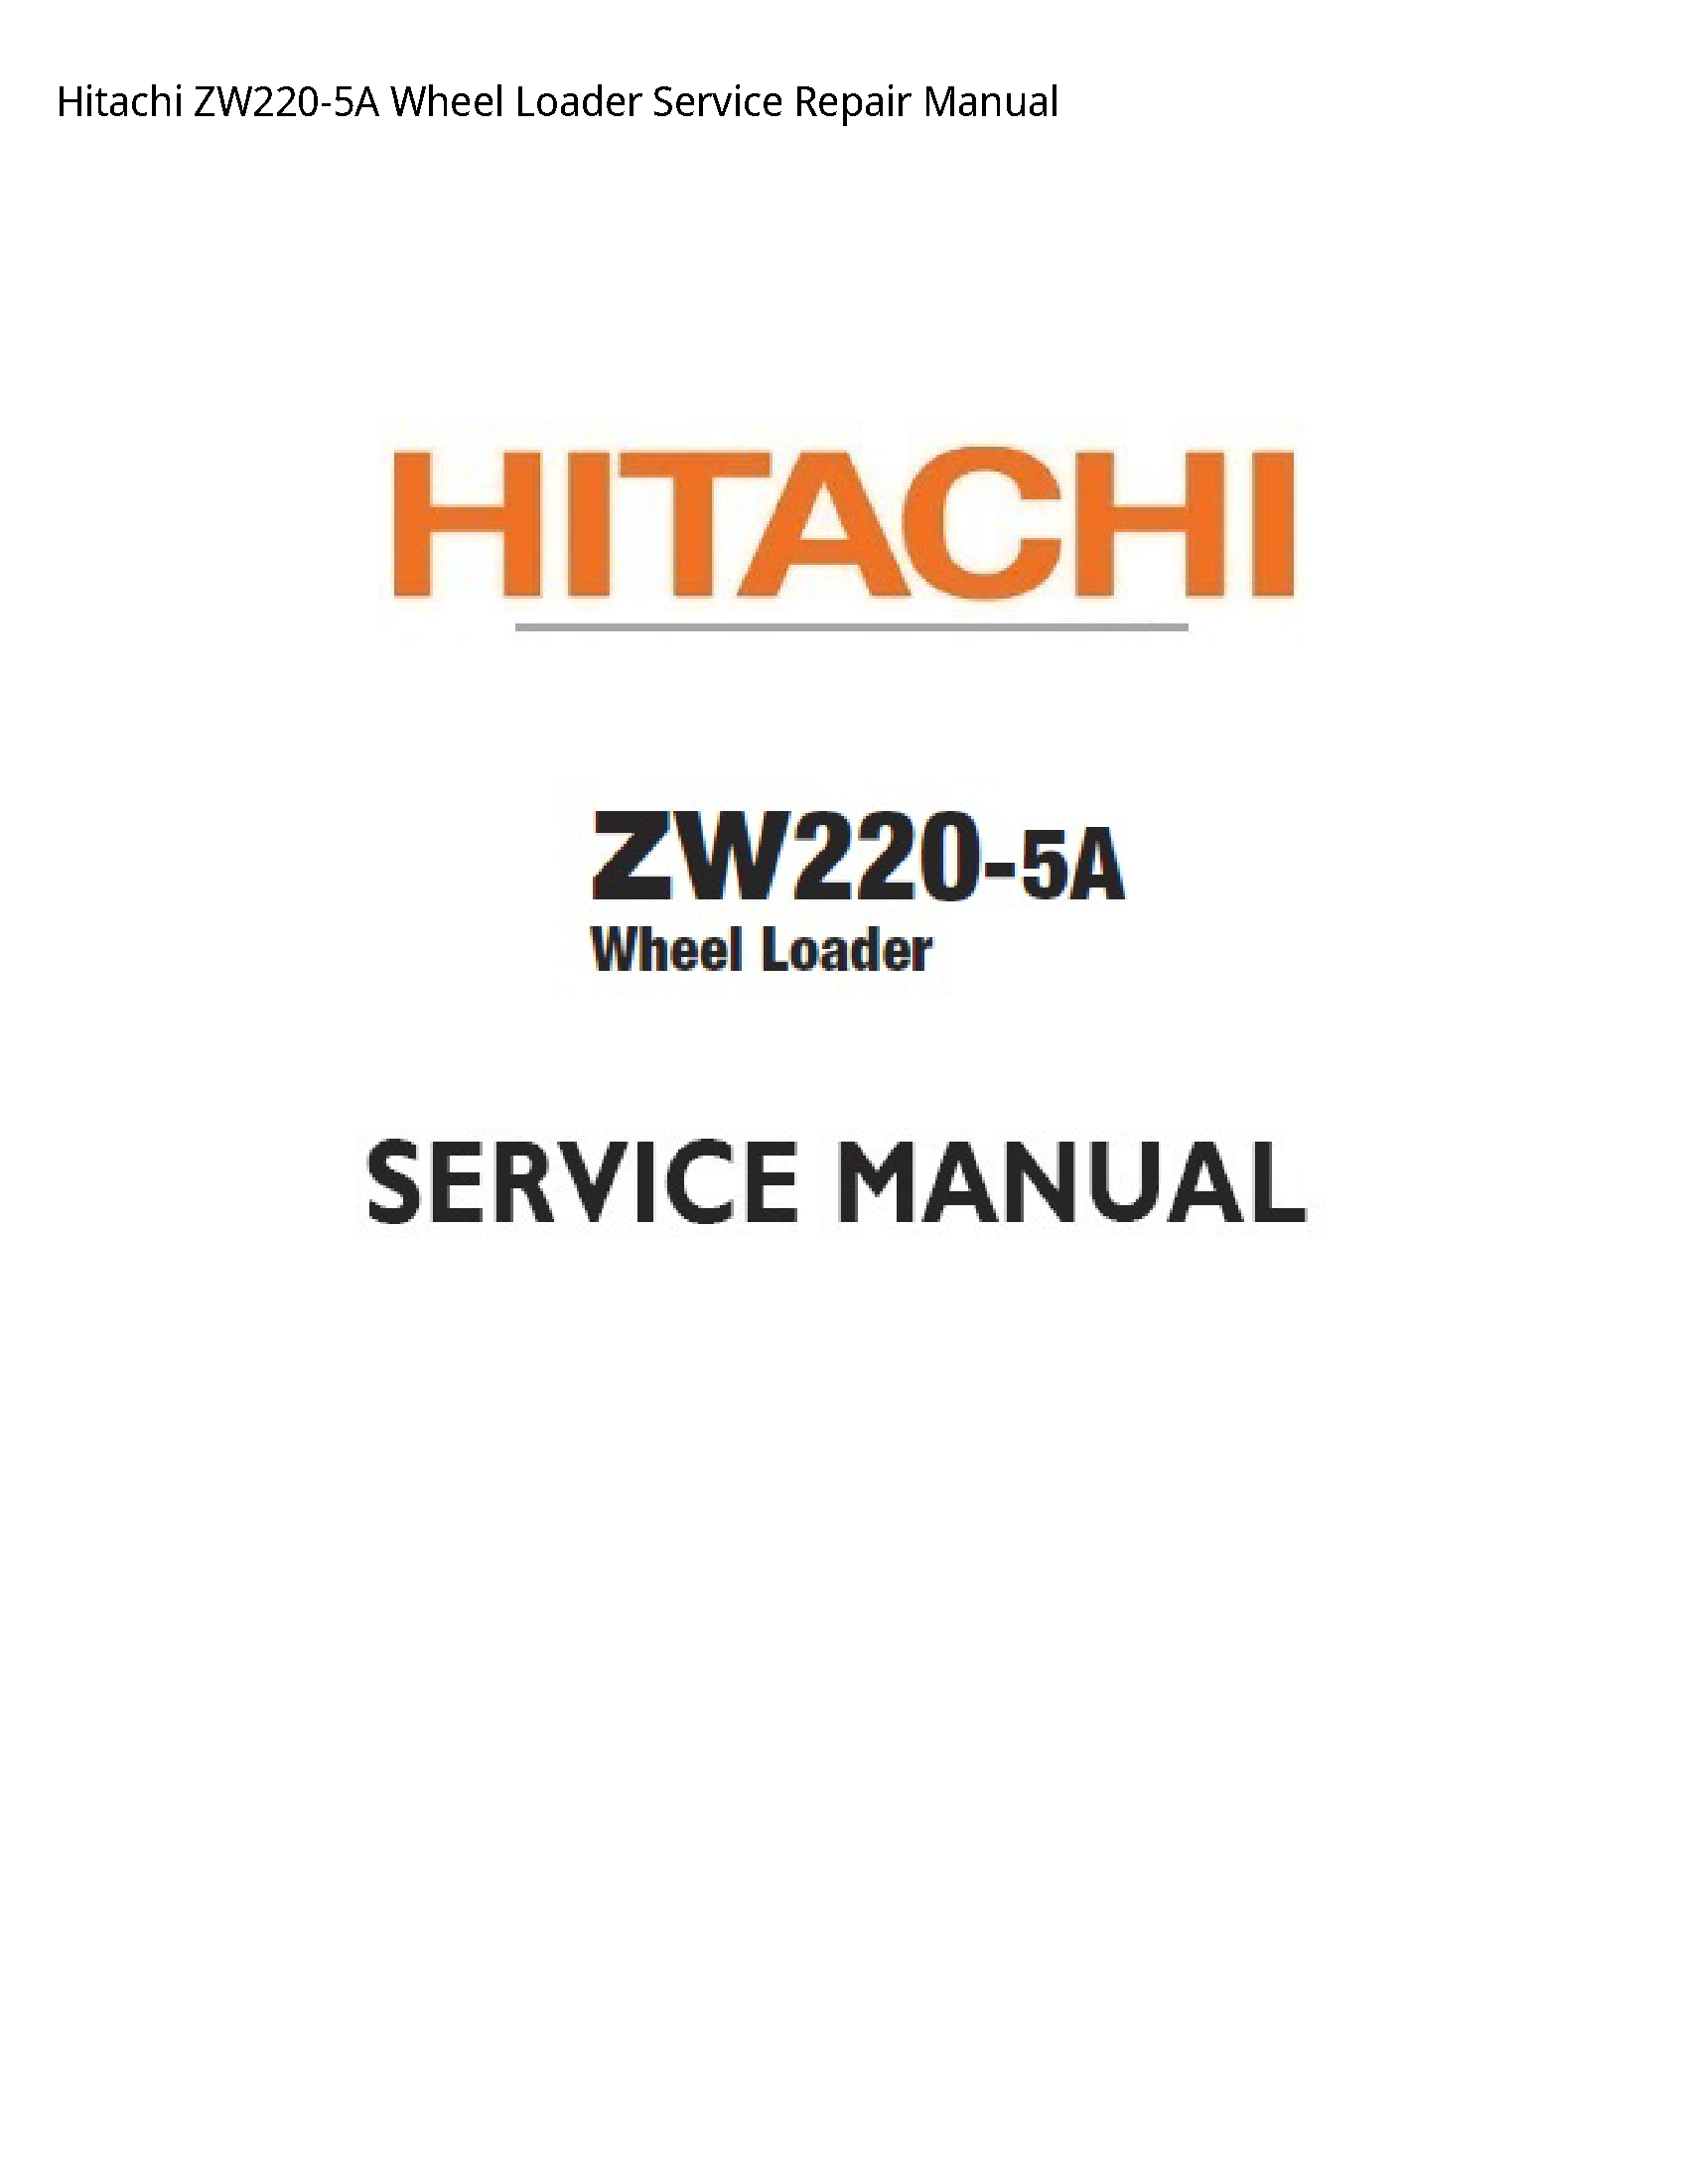 Hitachi ZW220-5A Wheel Loader manual